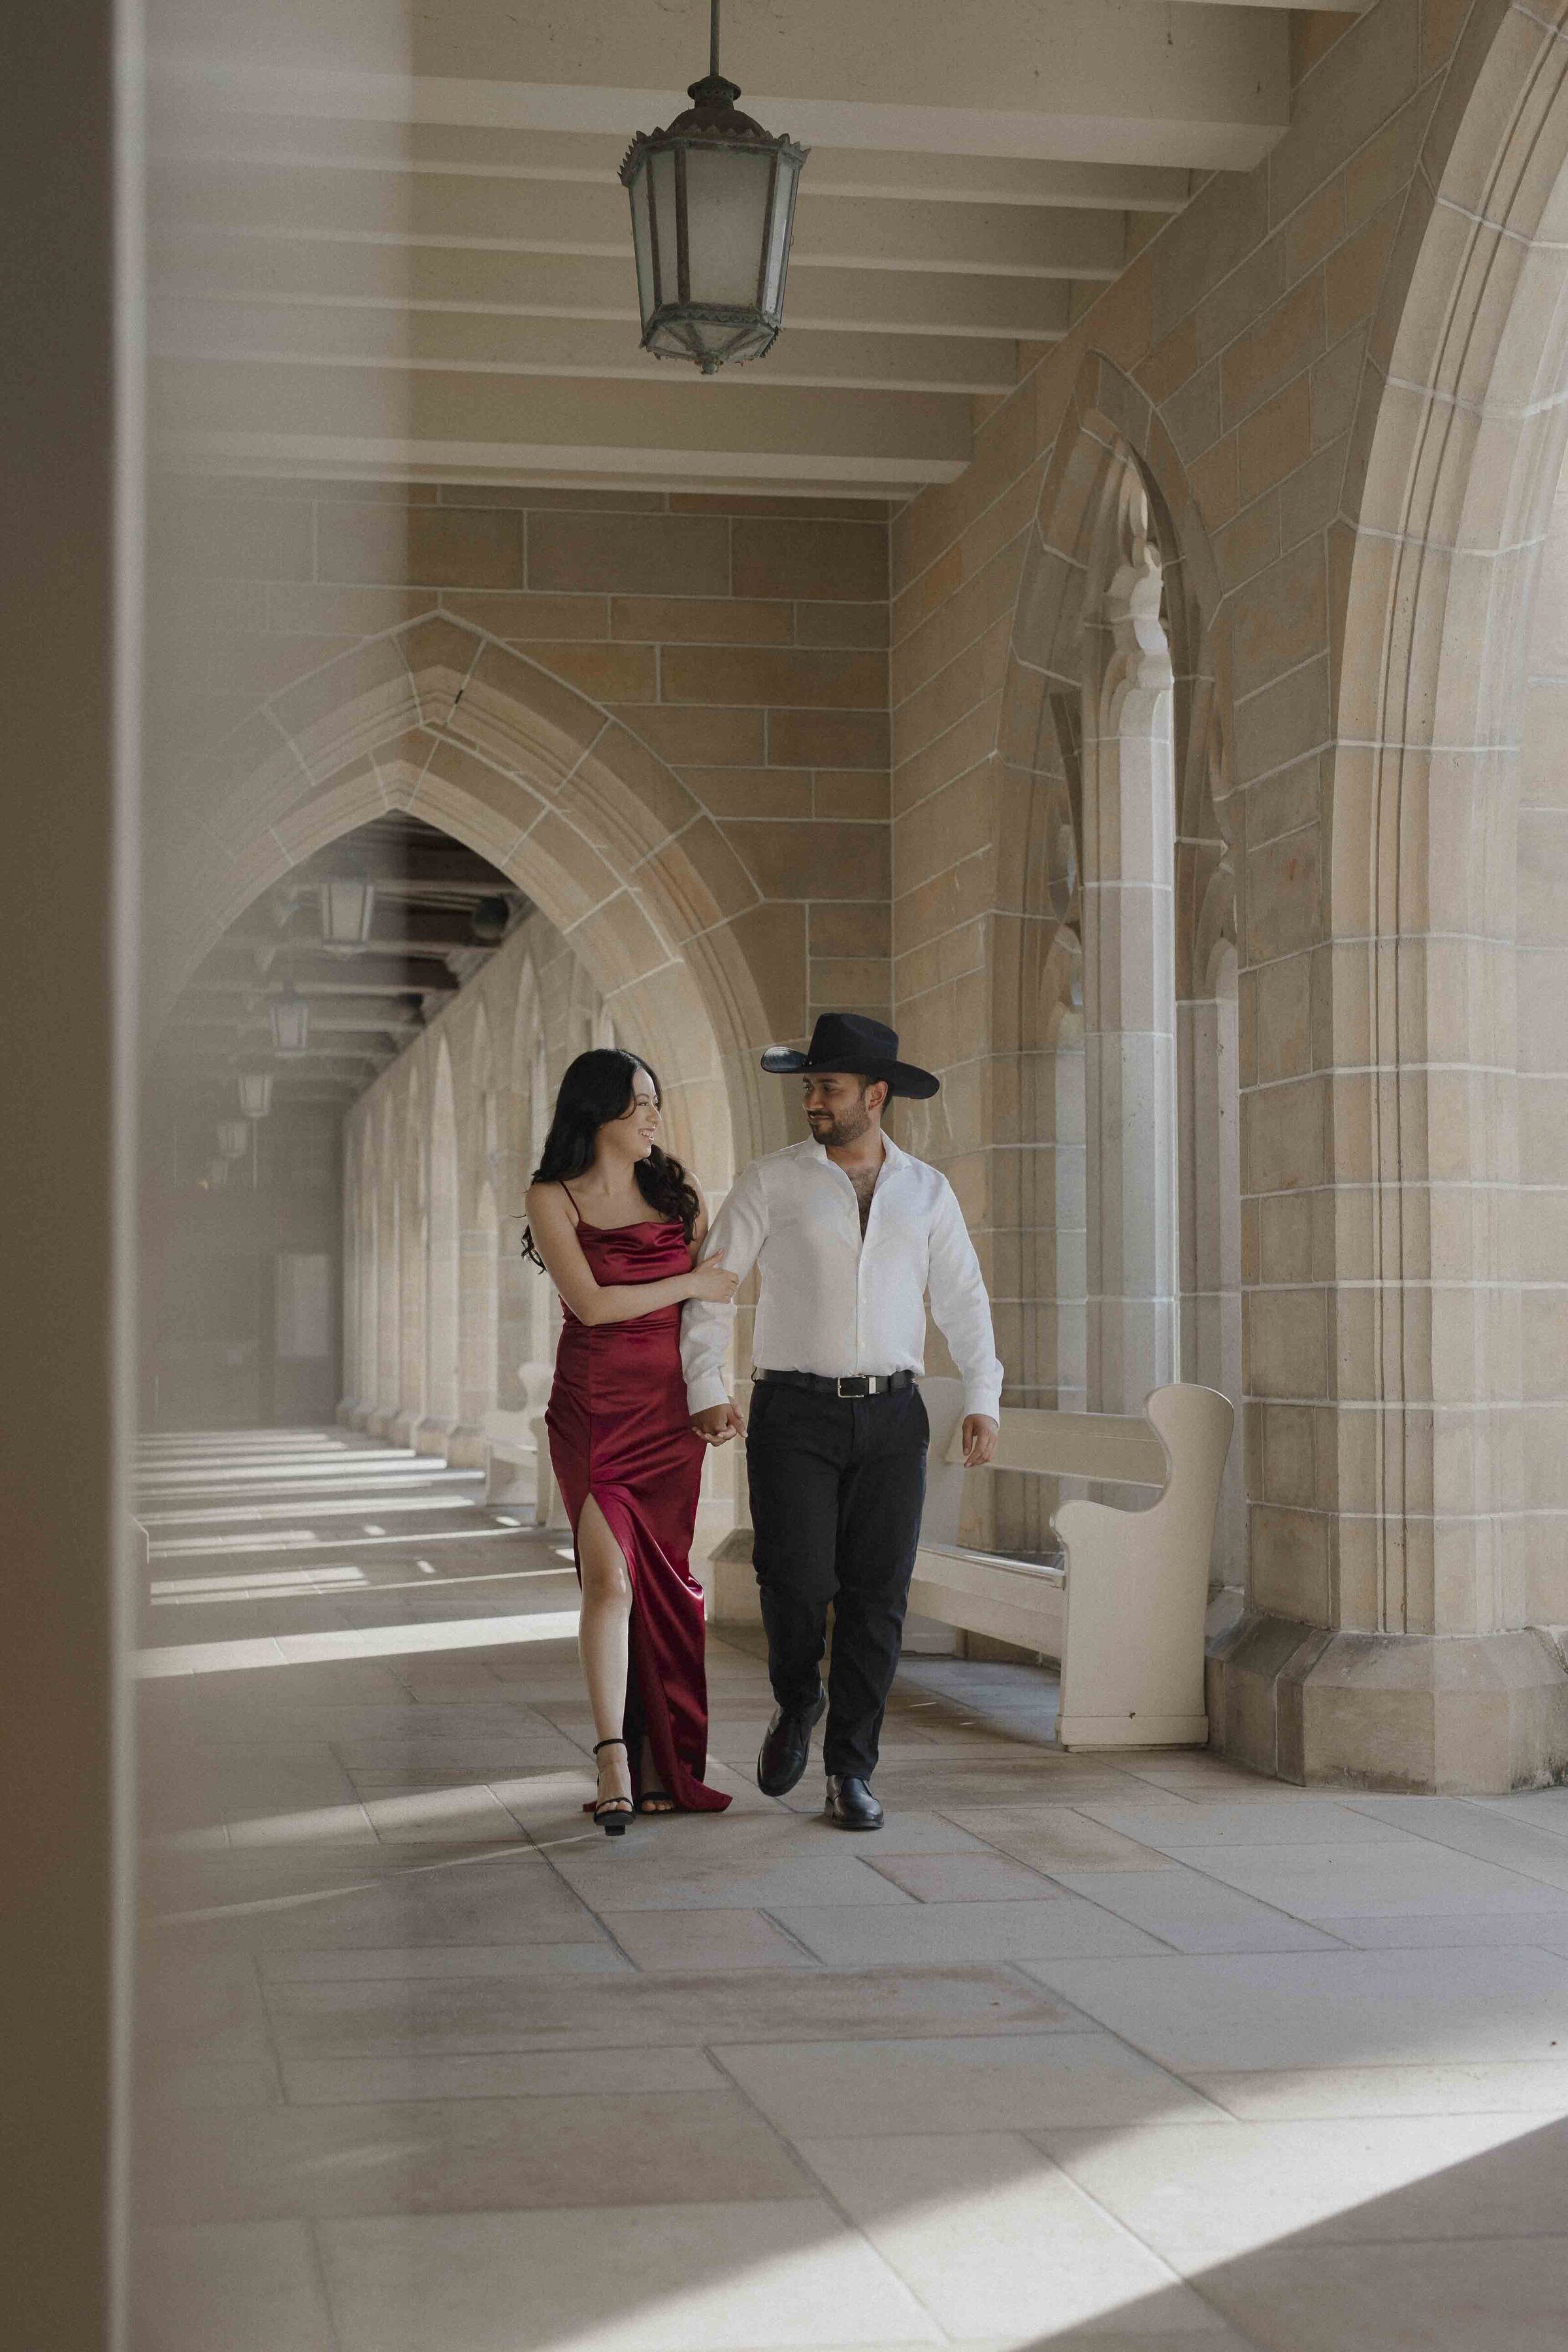 Man wearing hat walking with woman wearing red dresss